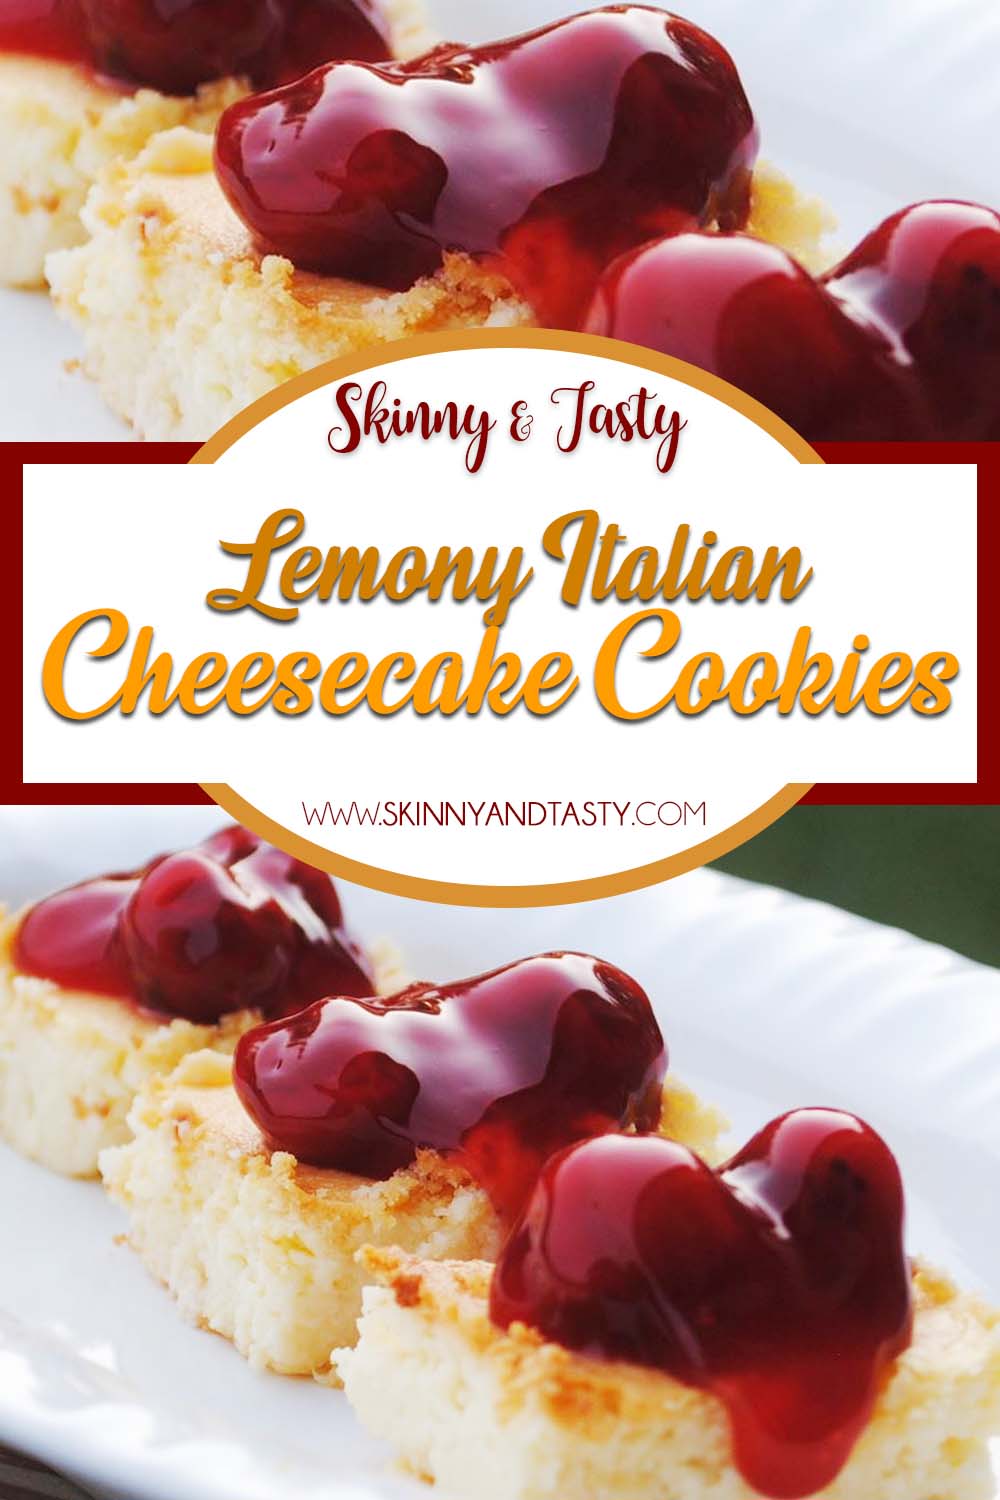 Lemony Italian Cheesecake Cookies Recipe